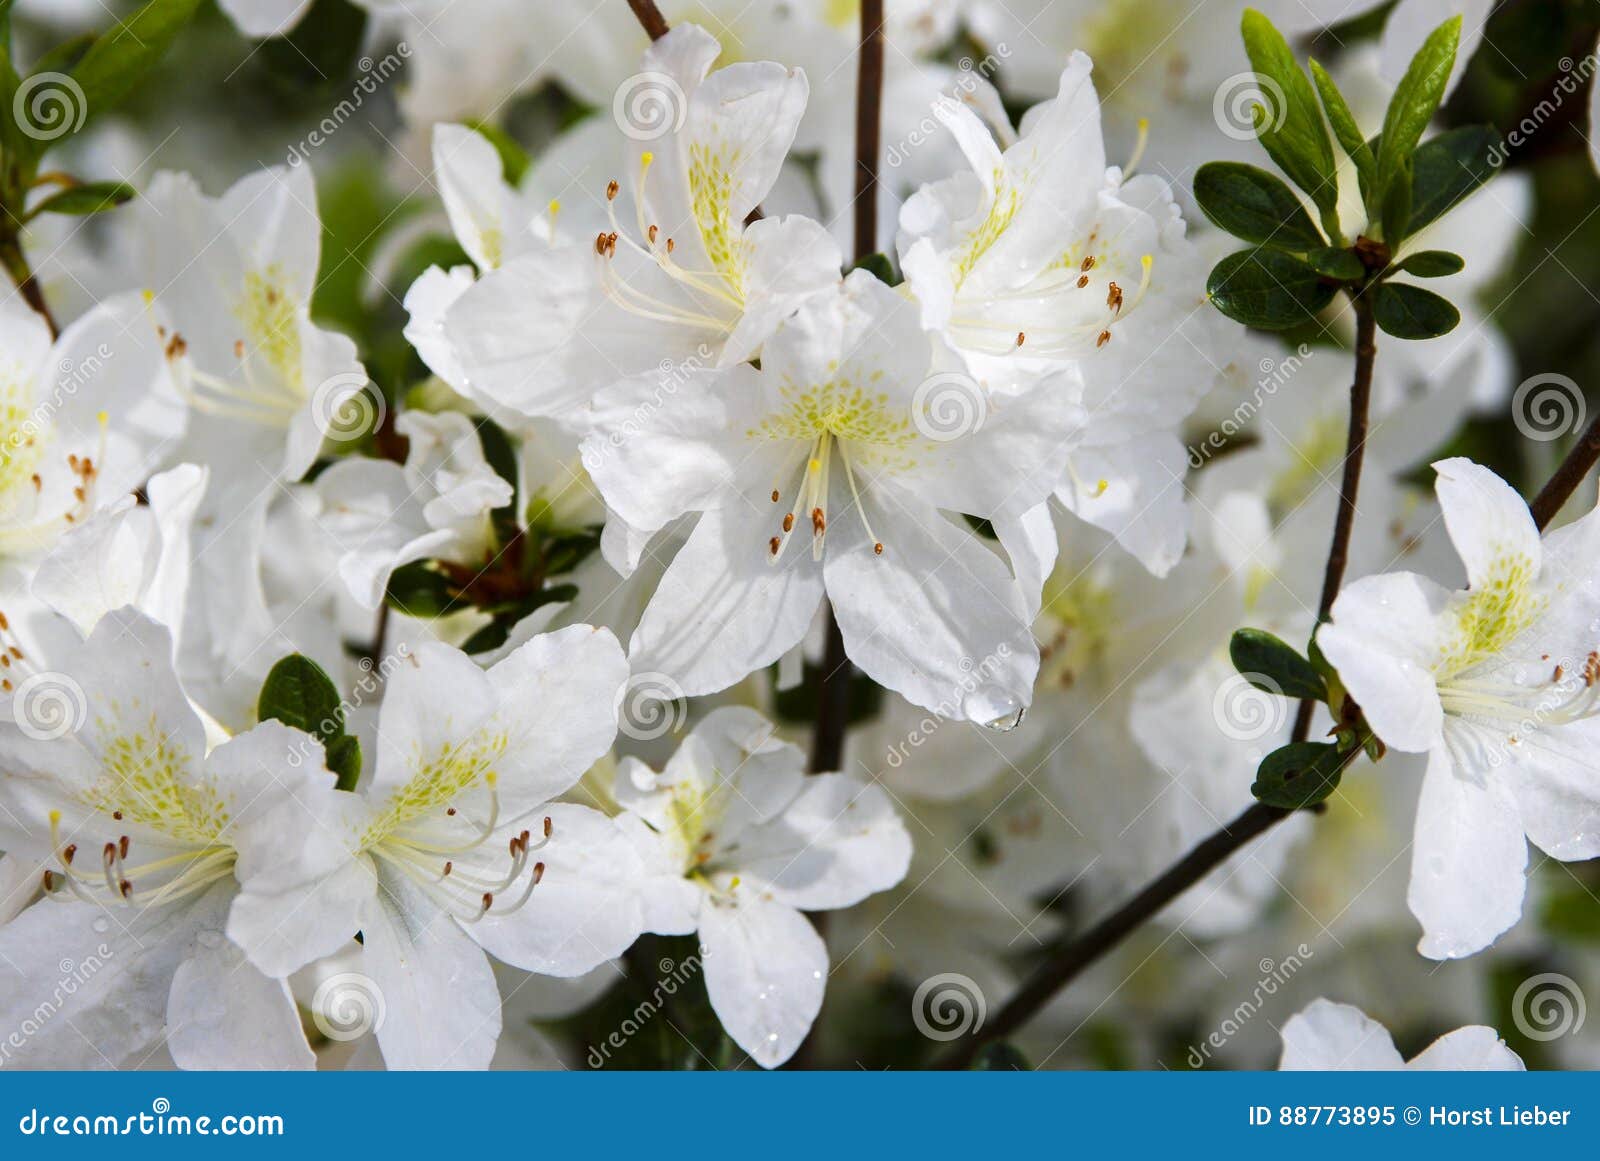 rhododendron_ baden-baden, germany